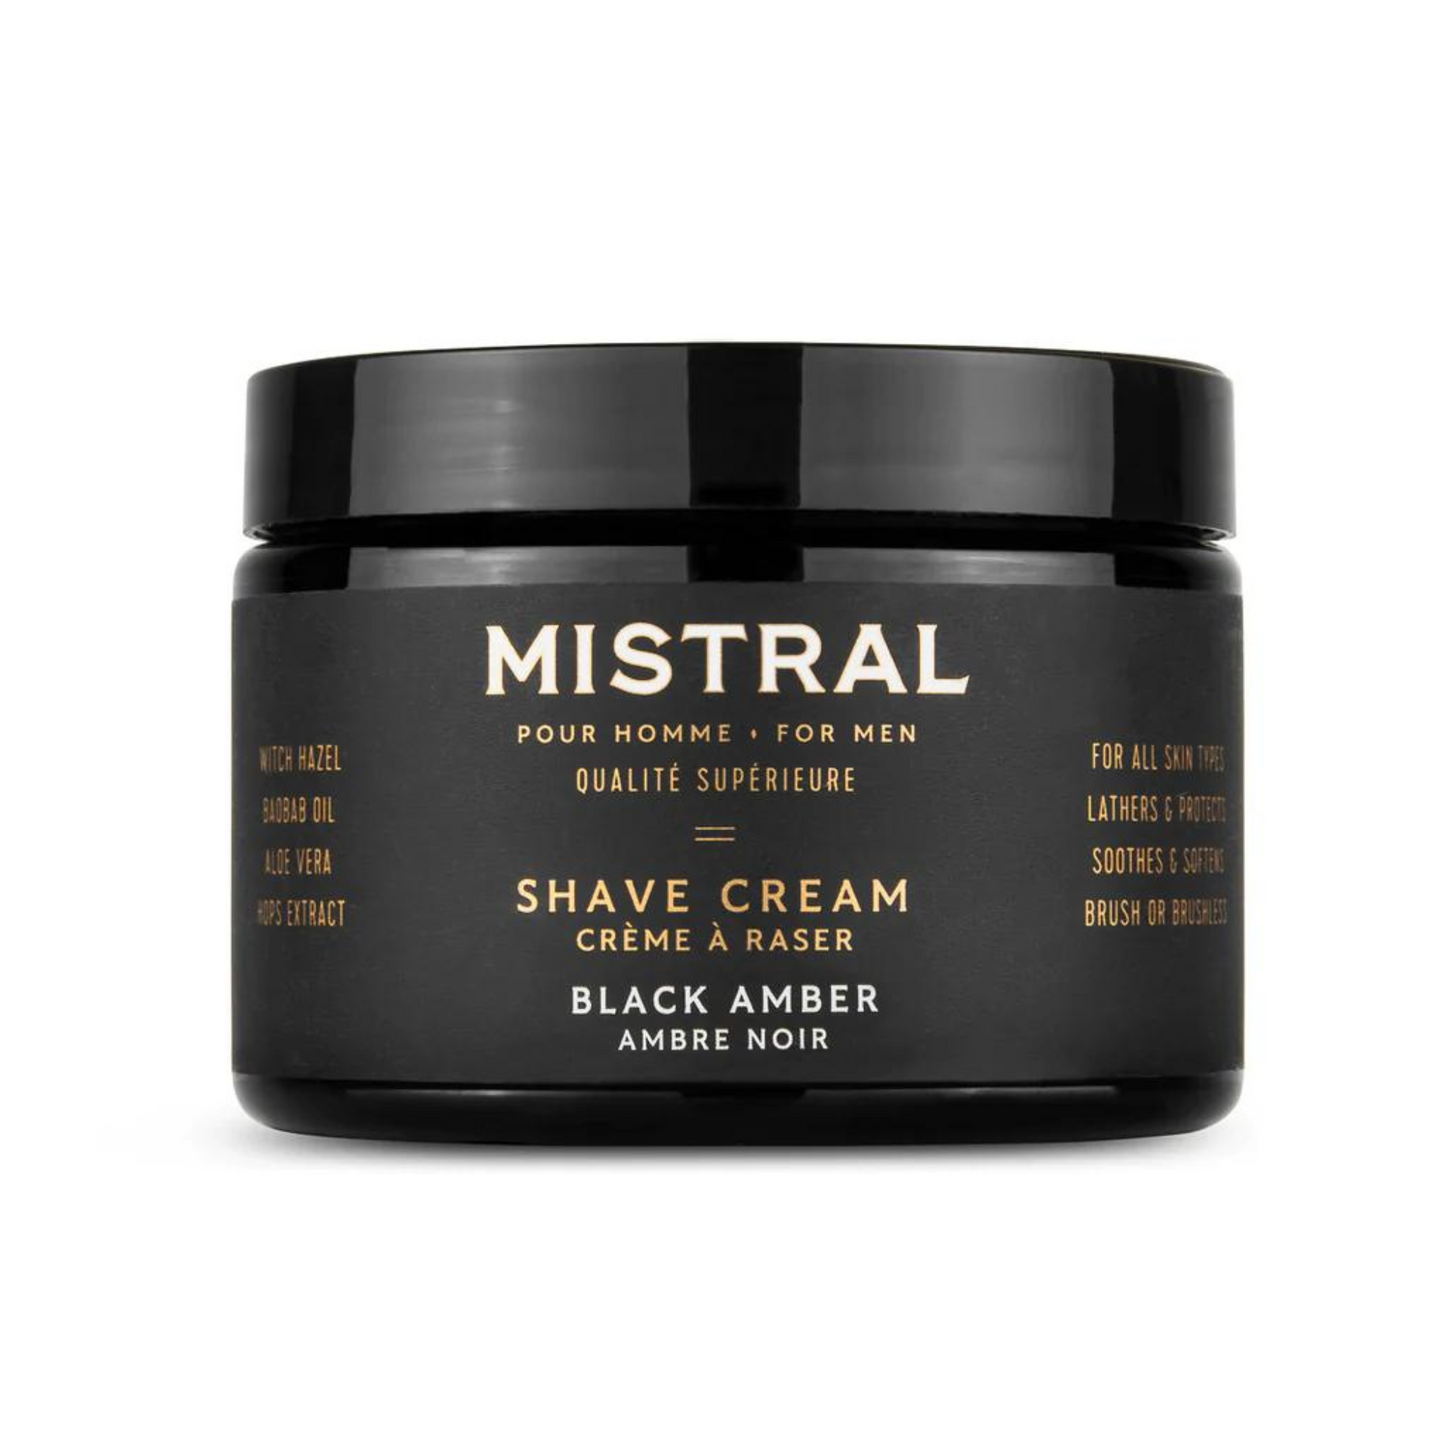 Primary Image of Mistral Black Amber Shave Cream (9 oz)